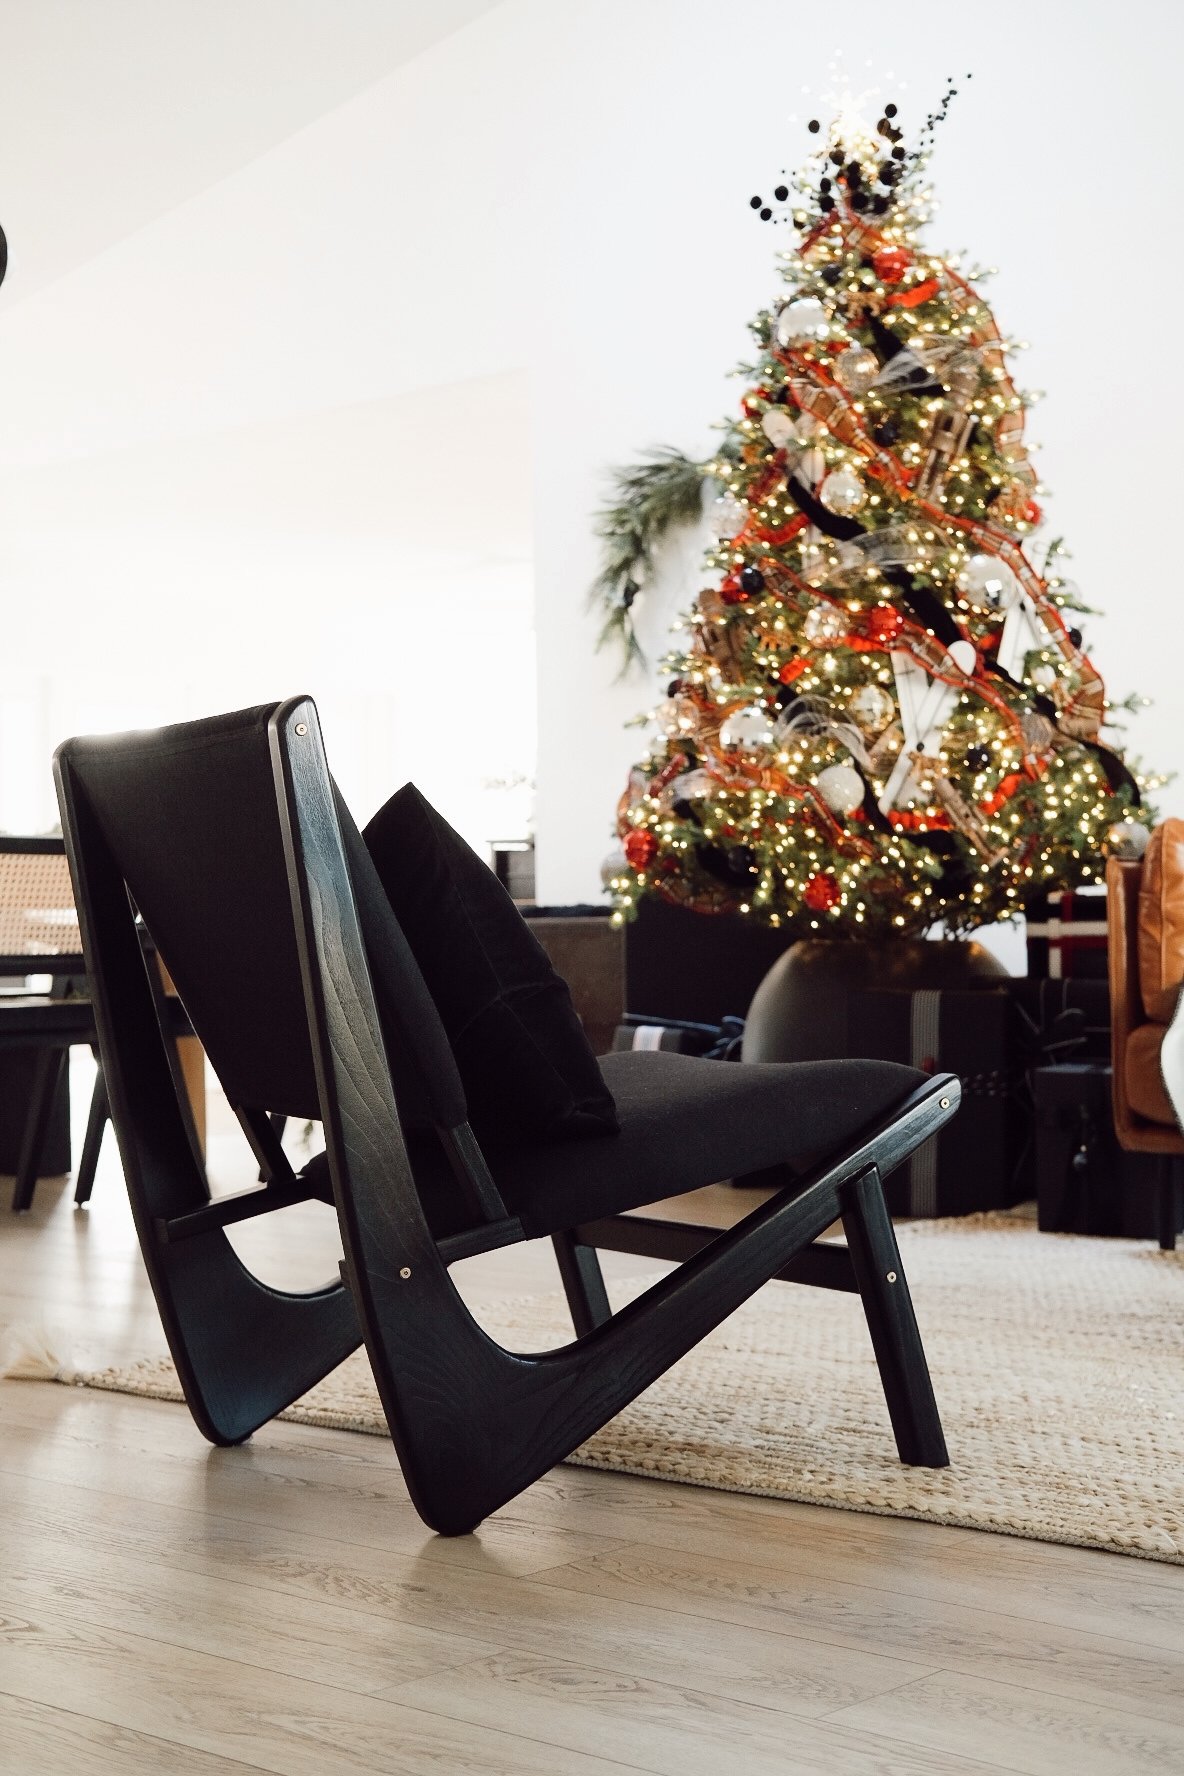 https://images.squarespace-cdn.com/content/v1/5449a23fe4b04f35b928c028/1639433126023-528Y4QH5MCOVN038DKVL/Me+%26+Mr.+Jones+Christmas+decor+2021.++Formal+living+room+with+Wells+sofa%2C+Loloi+Playa+rug%2C+micro+LED+Christmas+tree%2C+Noir+Boomerang+chairs%2C+and+DIY+abstract+artwork.5.jpg